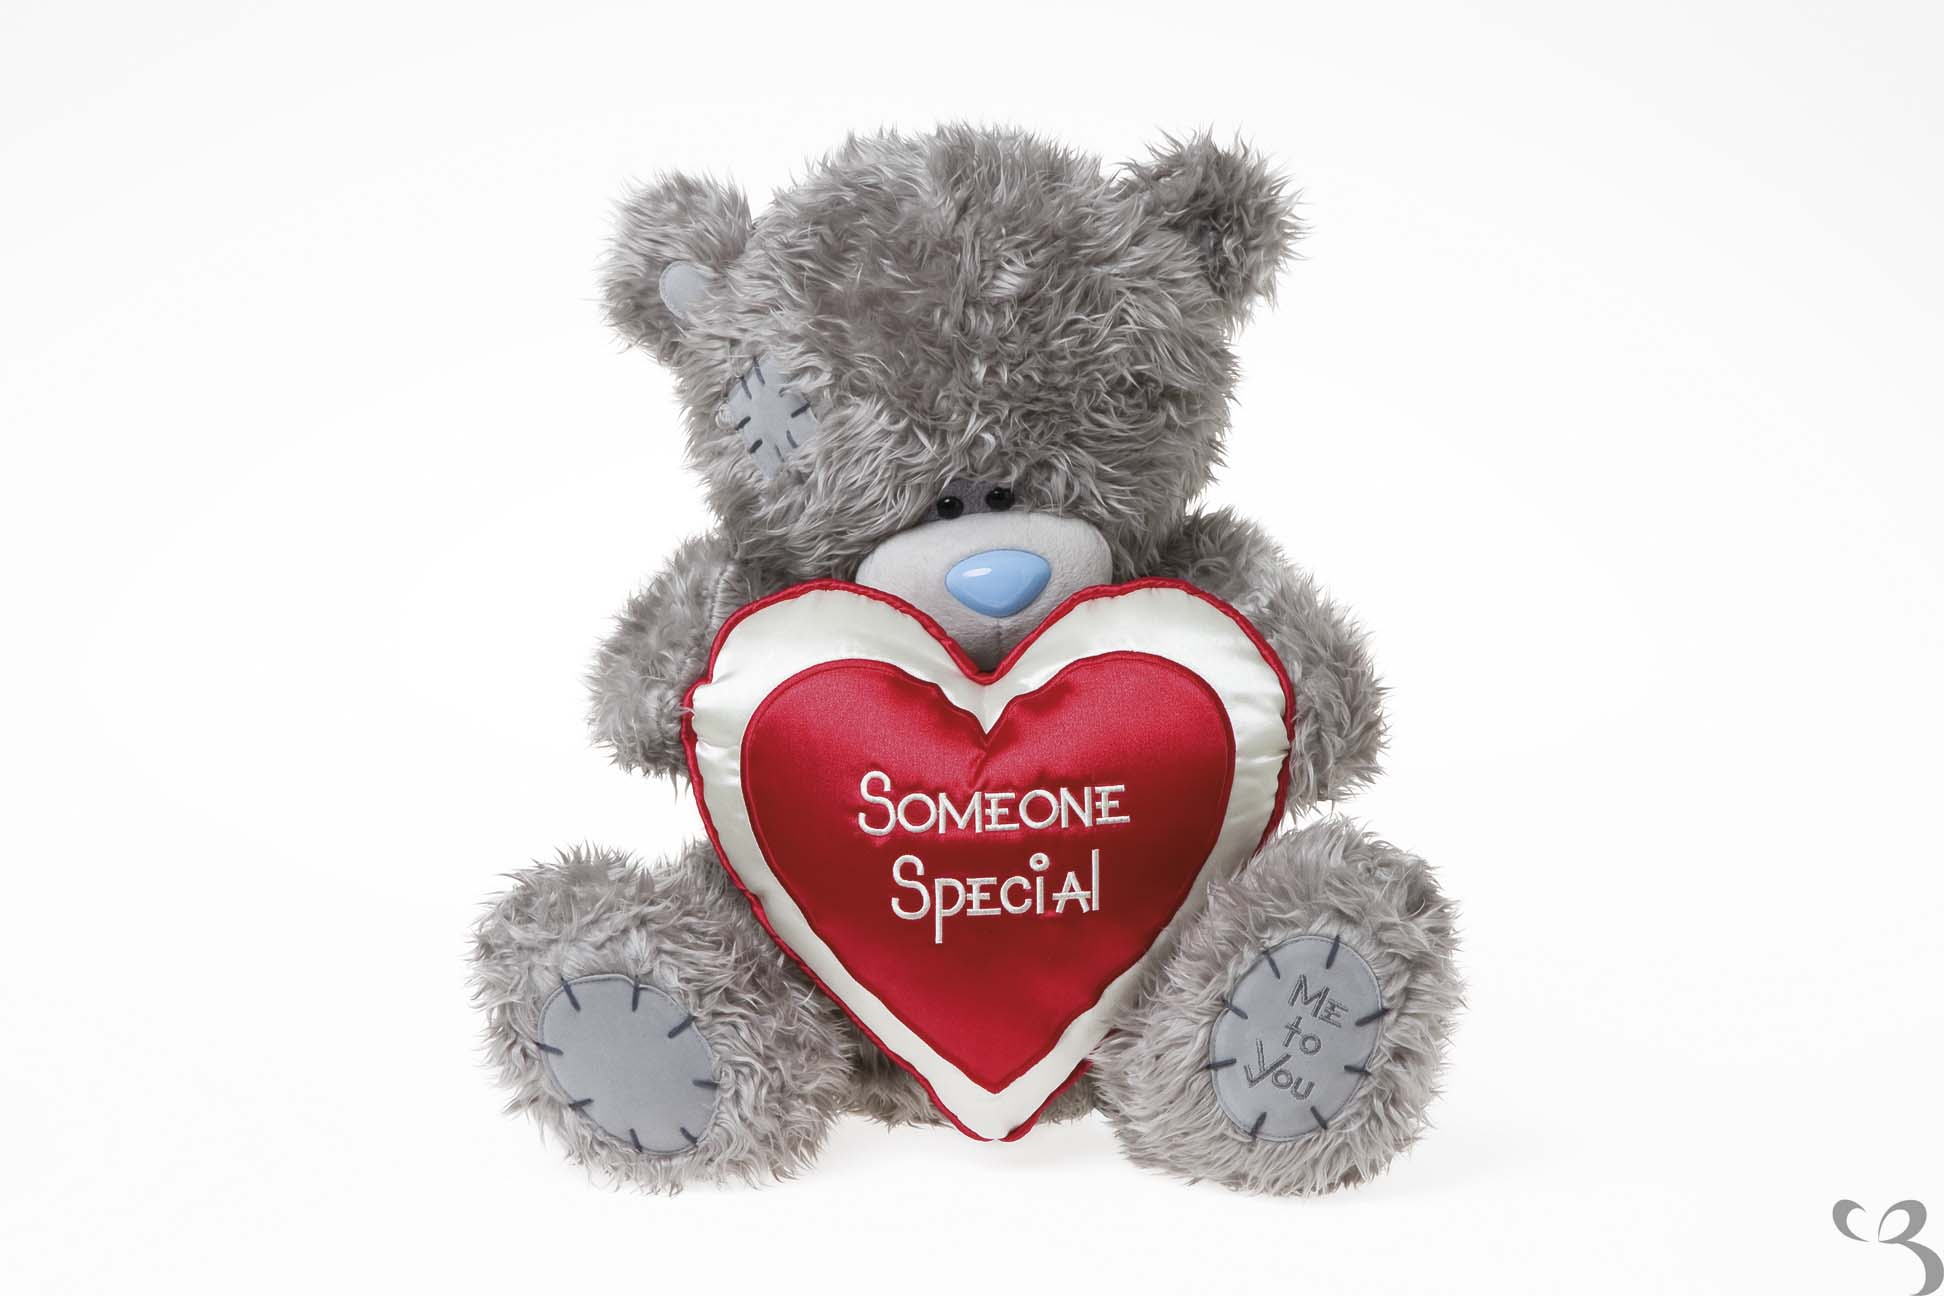 someone special wallpaper,stuffed toy,teddy bear,toy,heart,love